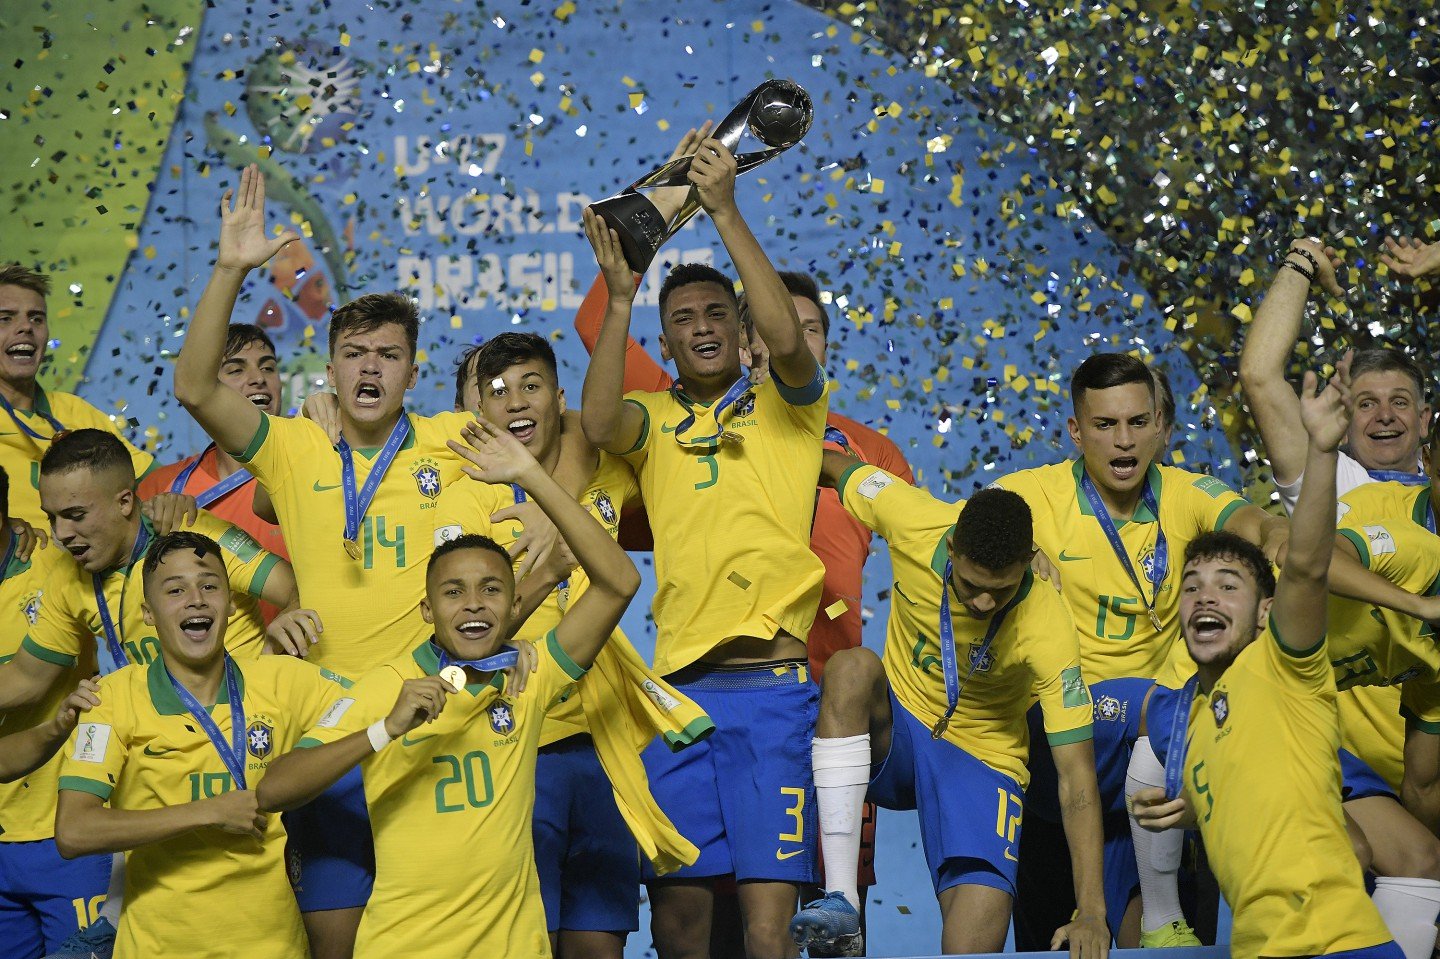 Show brasileiro! Na segunda rodada da Copa do Mundo FIFA Sub-17